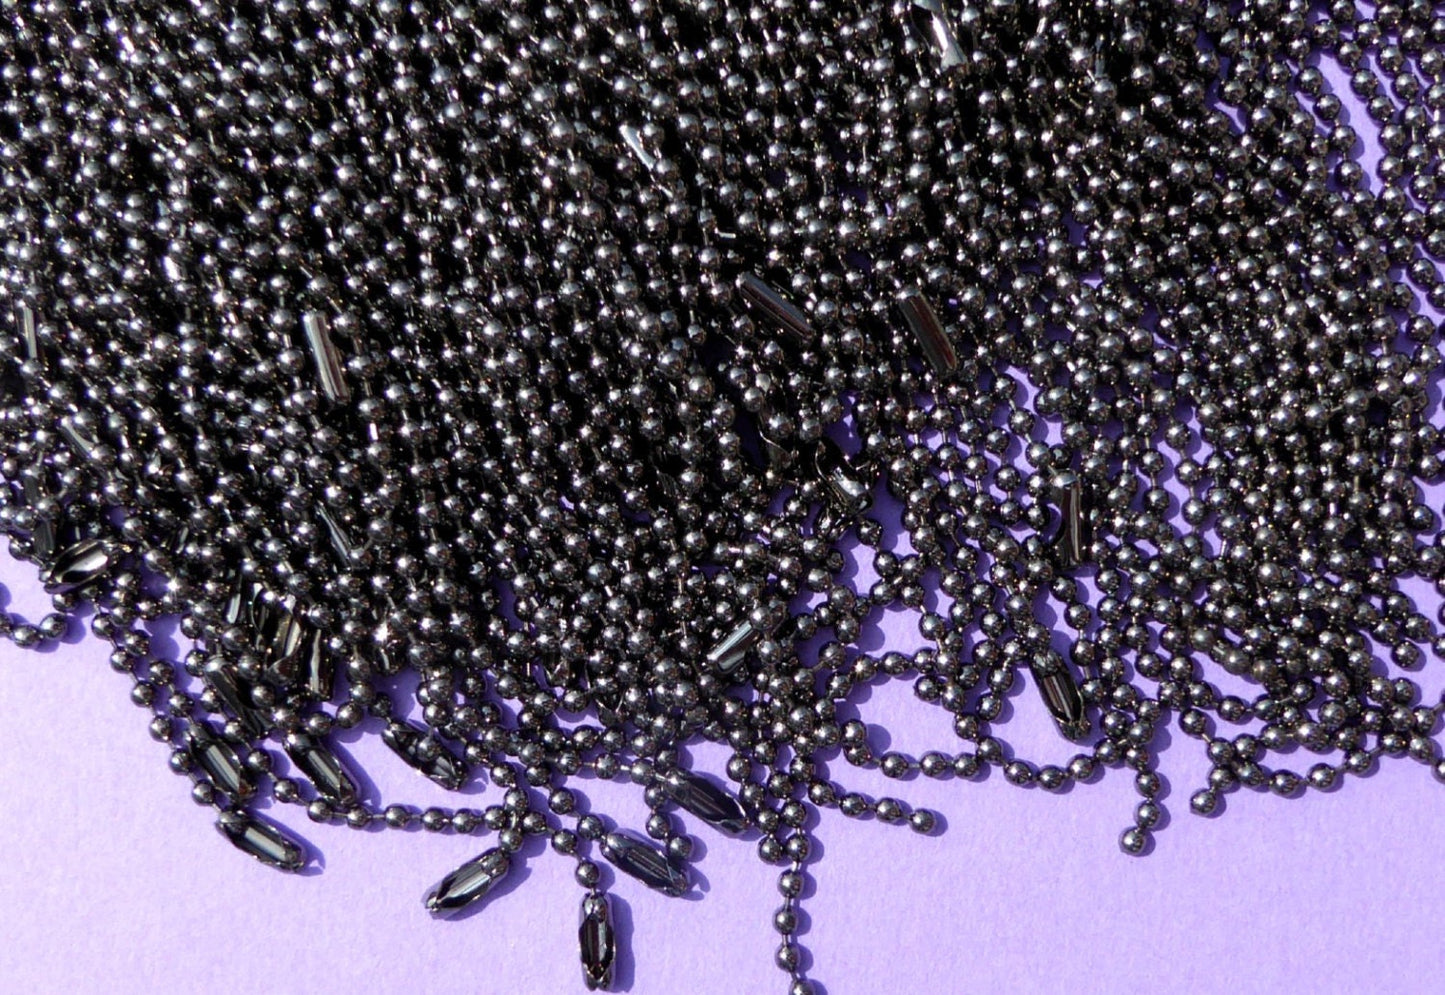 Gunmetal Ball Chain Necklaces - 24 inch - 2.4mm Diameter - Set of 10 - Gray Dark Silver Colored